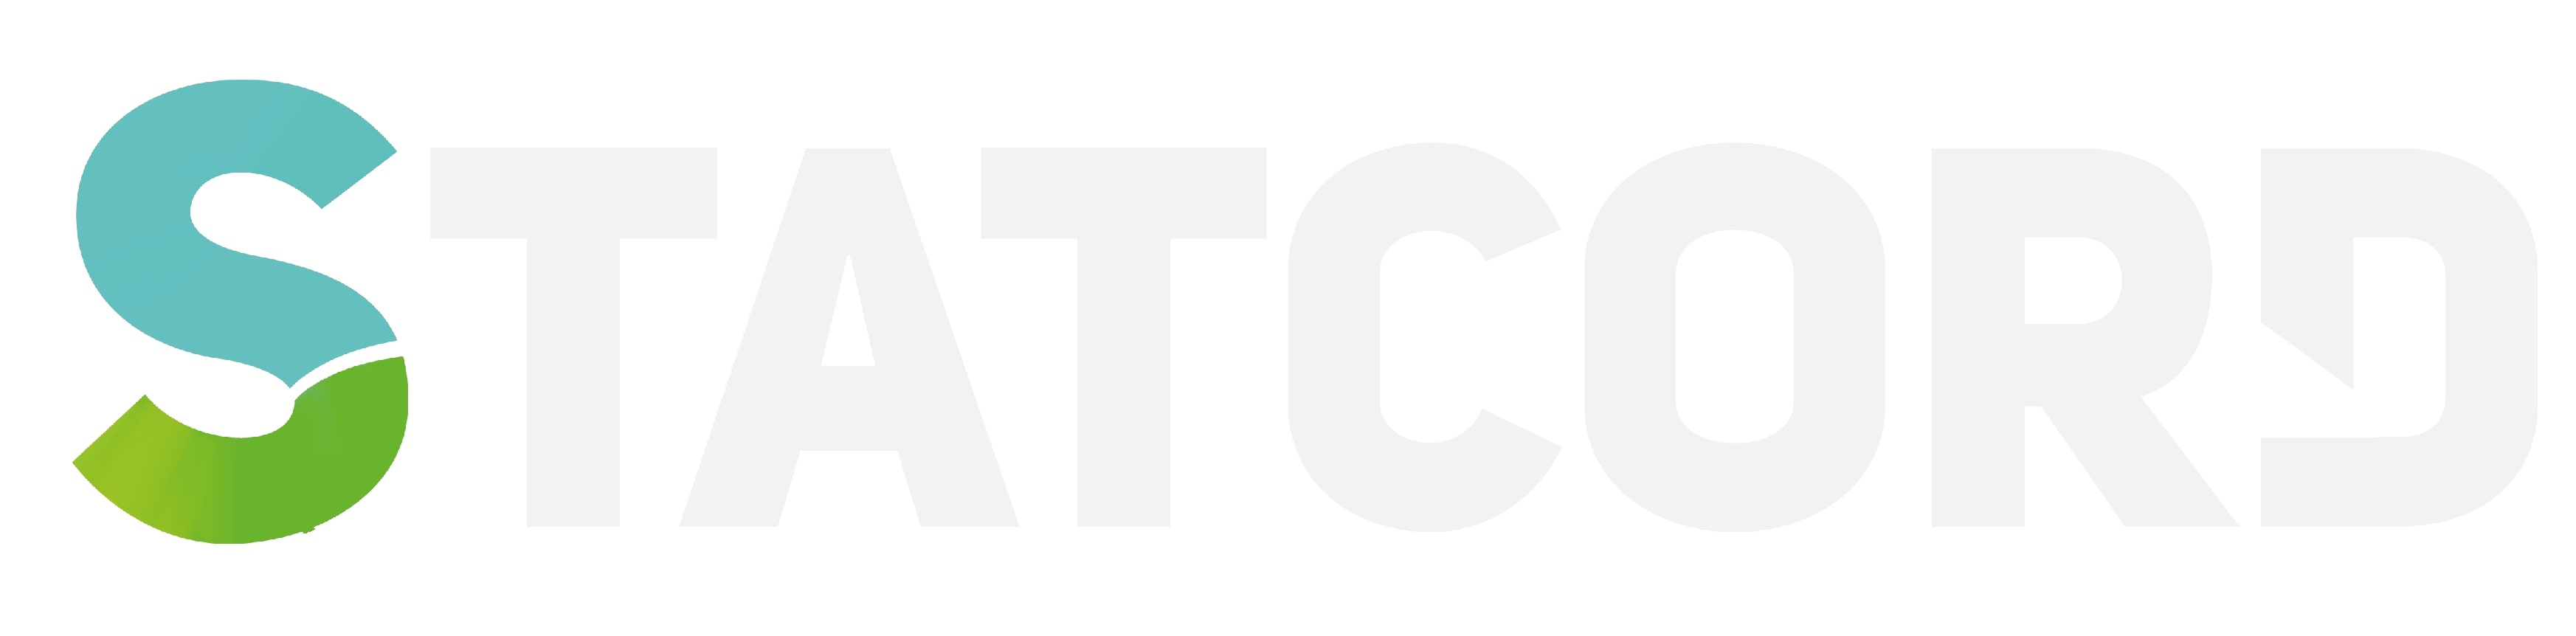 Statcord logo